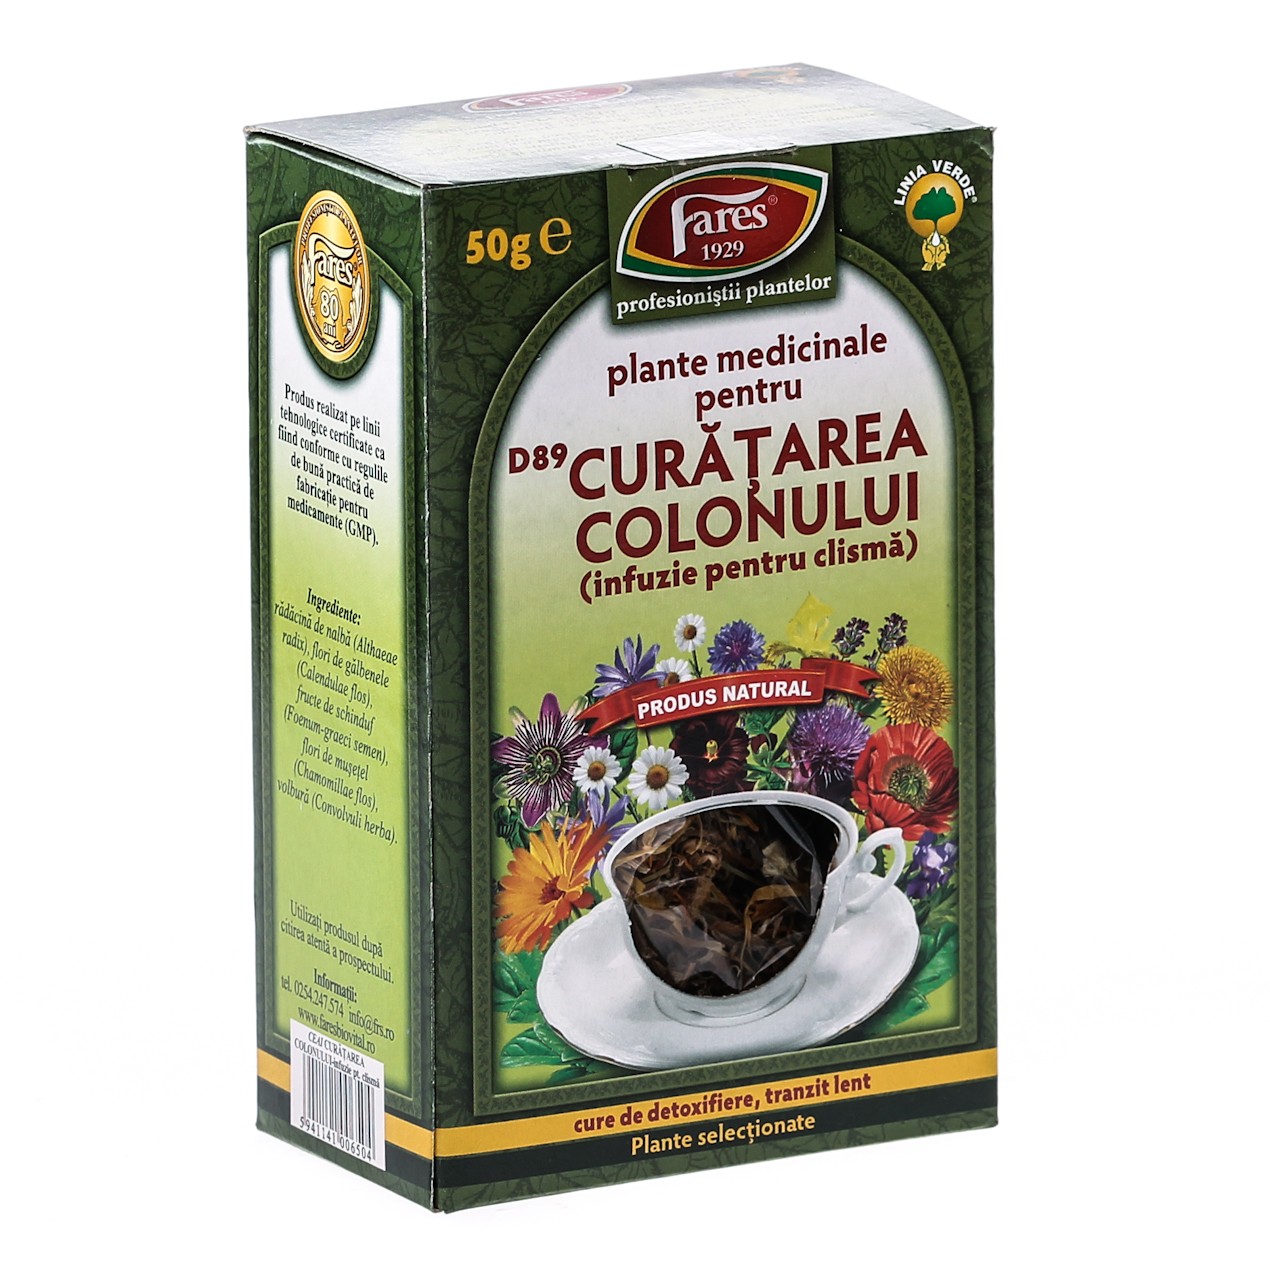 Ceaiuri - Ceai curatare colon 50g Fares, farmacieieftina.ro